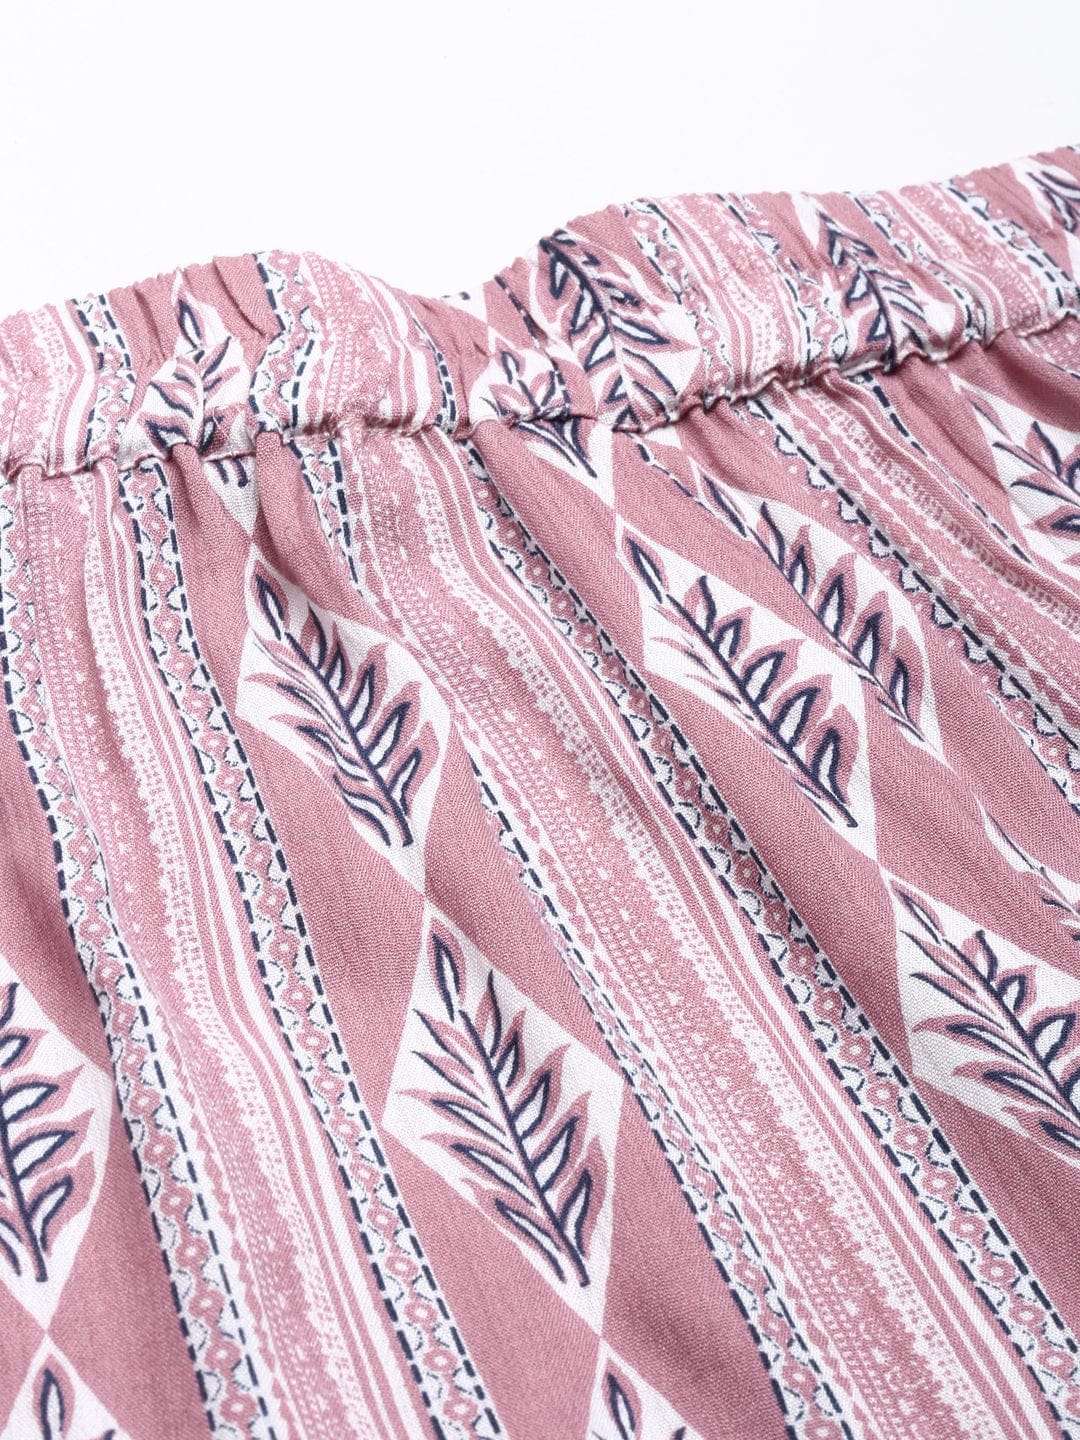 Buy  peplum dress /Women's /Pink ethnic printed /peplum top /palazzo pant on online from the Shaili